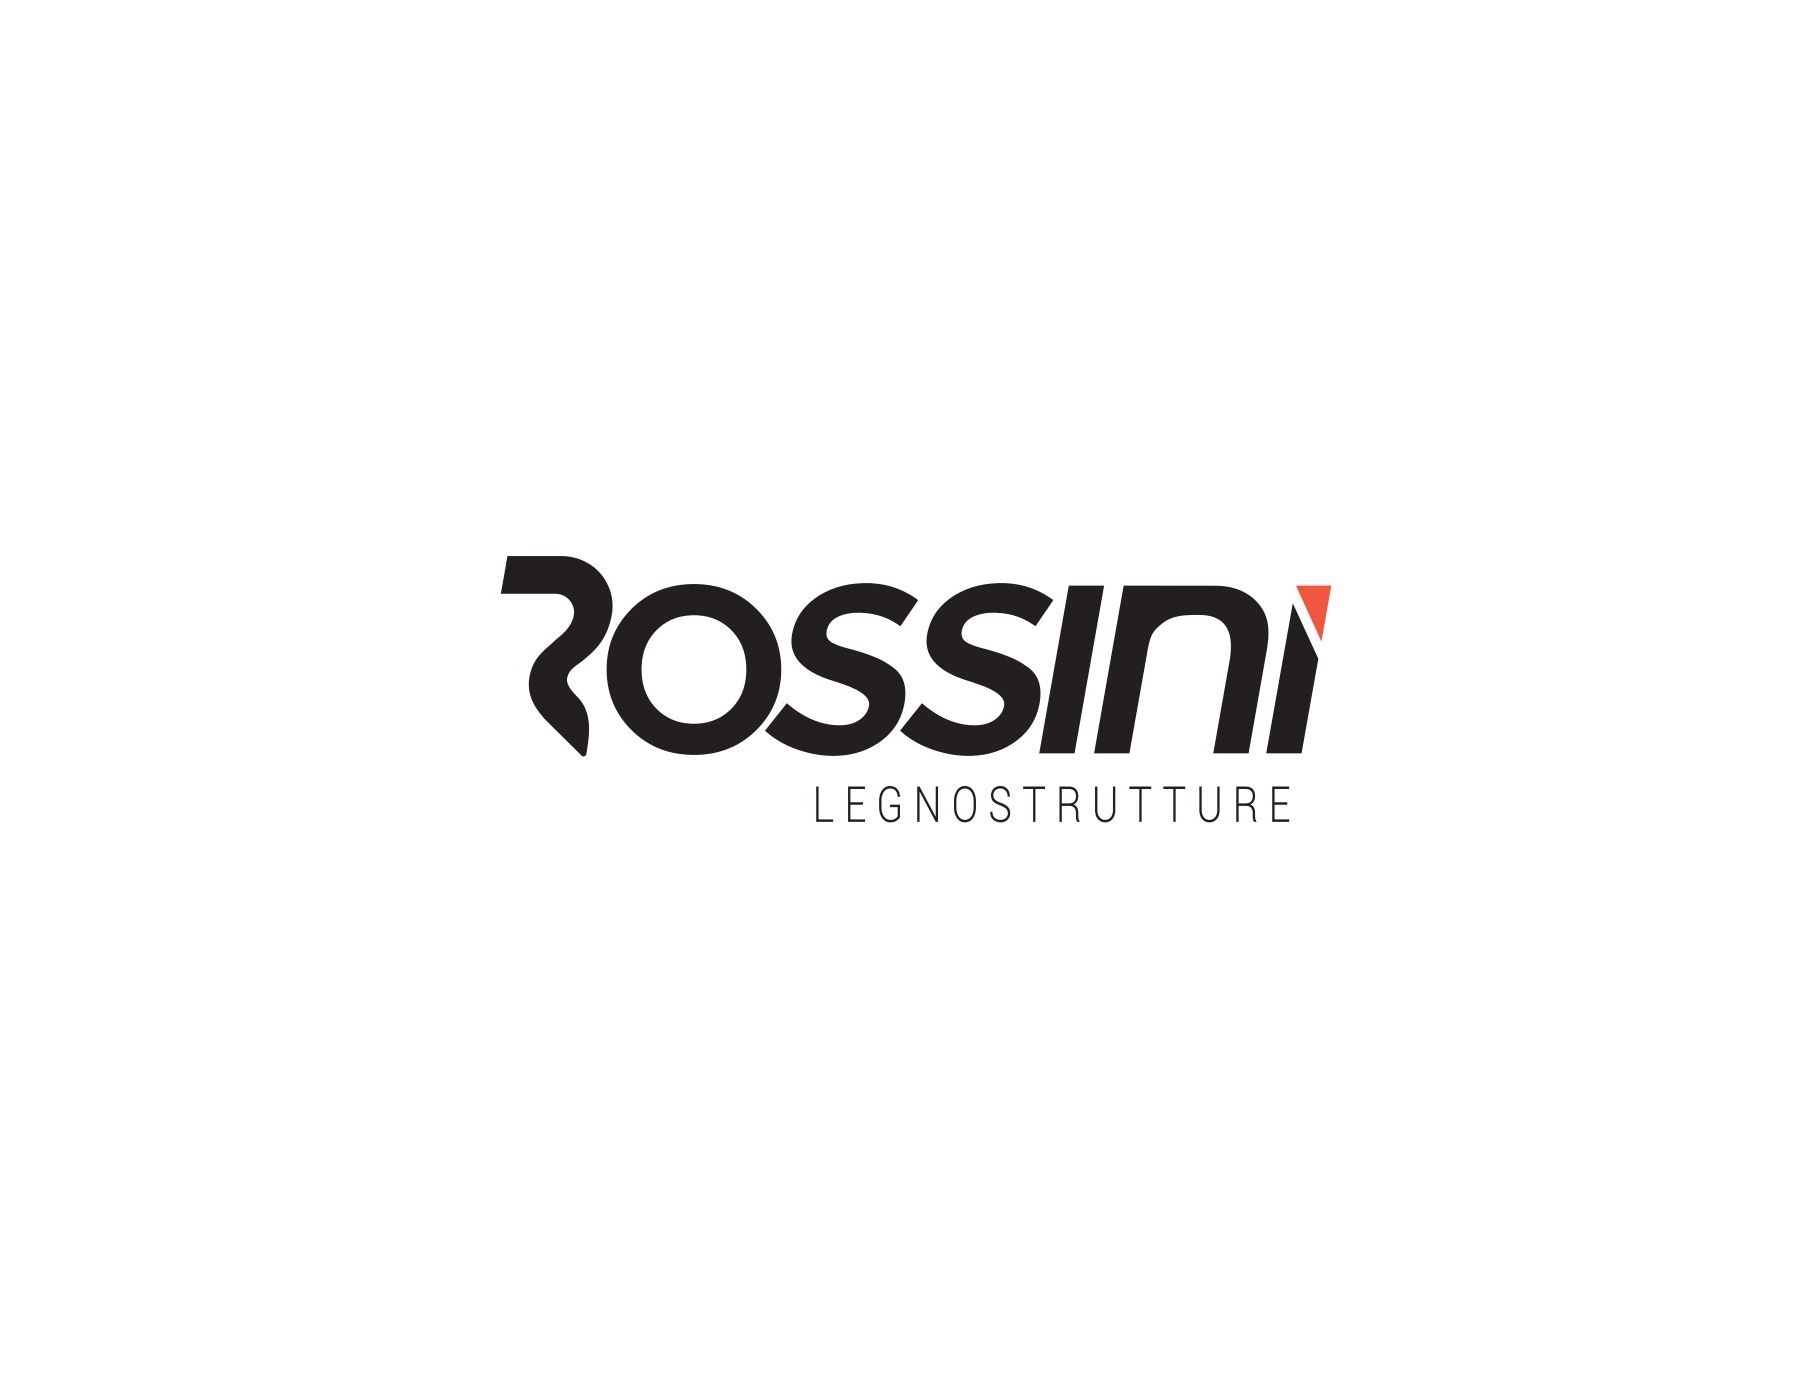 Rossini Legnostrutture - News